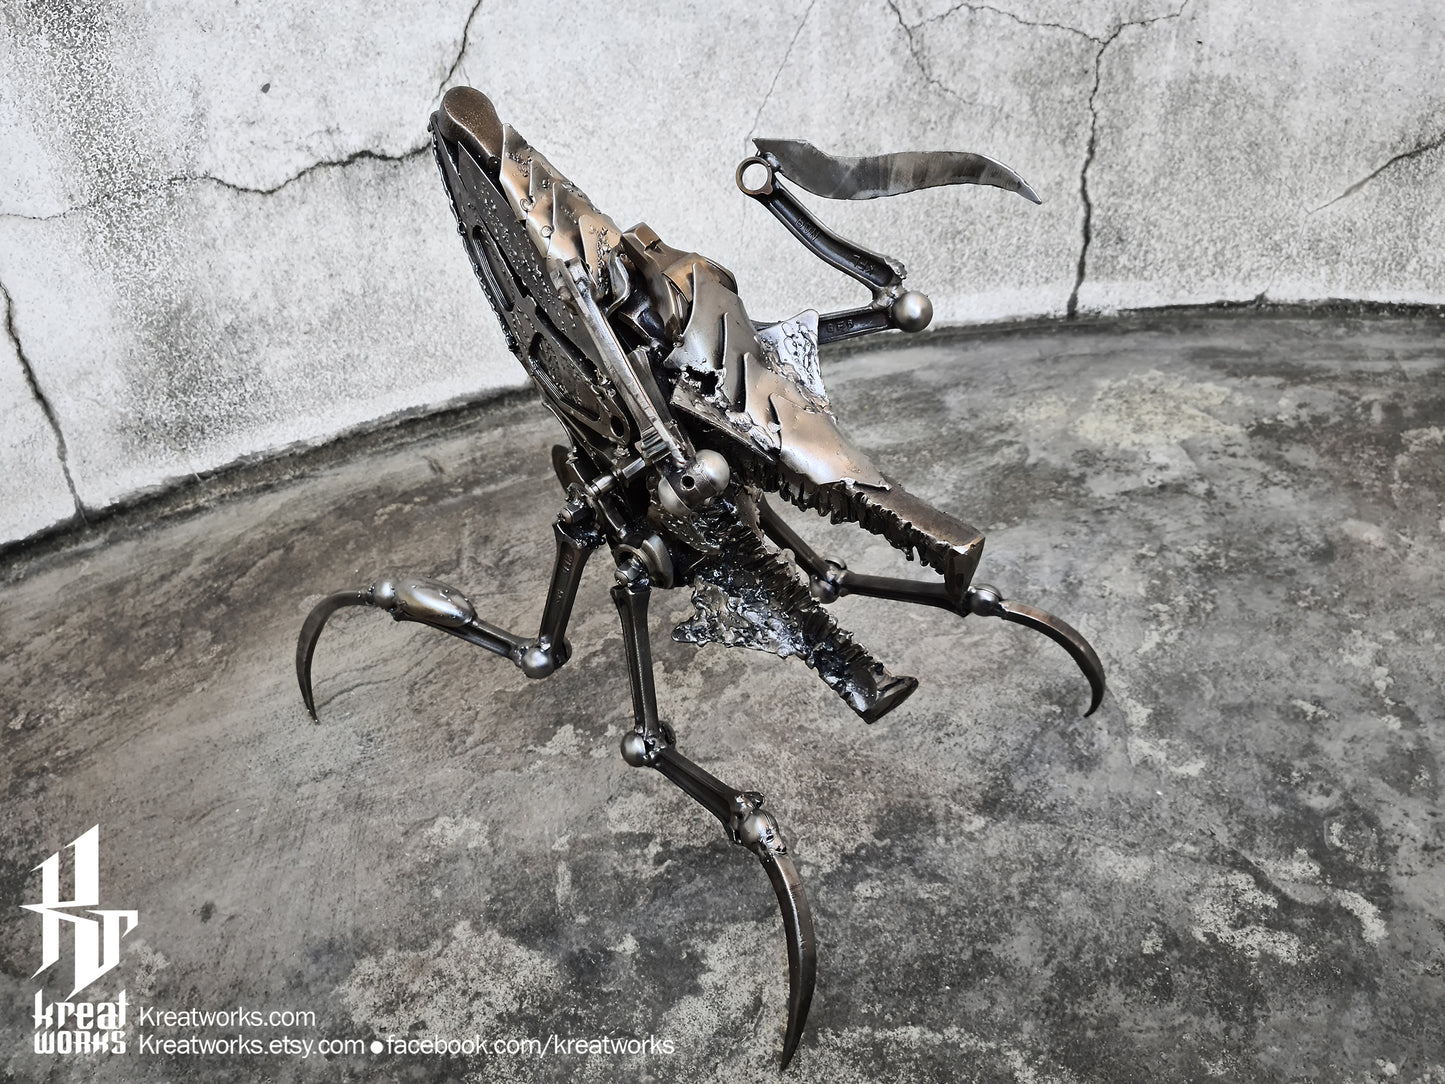 Recycled Metal Warrior Bug Sculpture / Recycle Metal Sustainable Sculpture Art